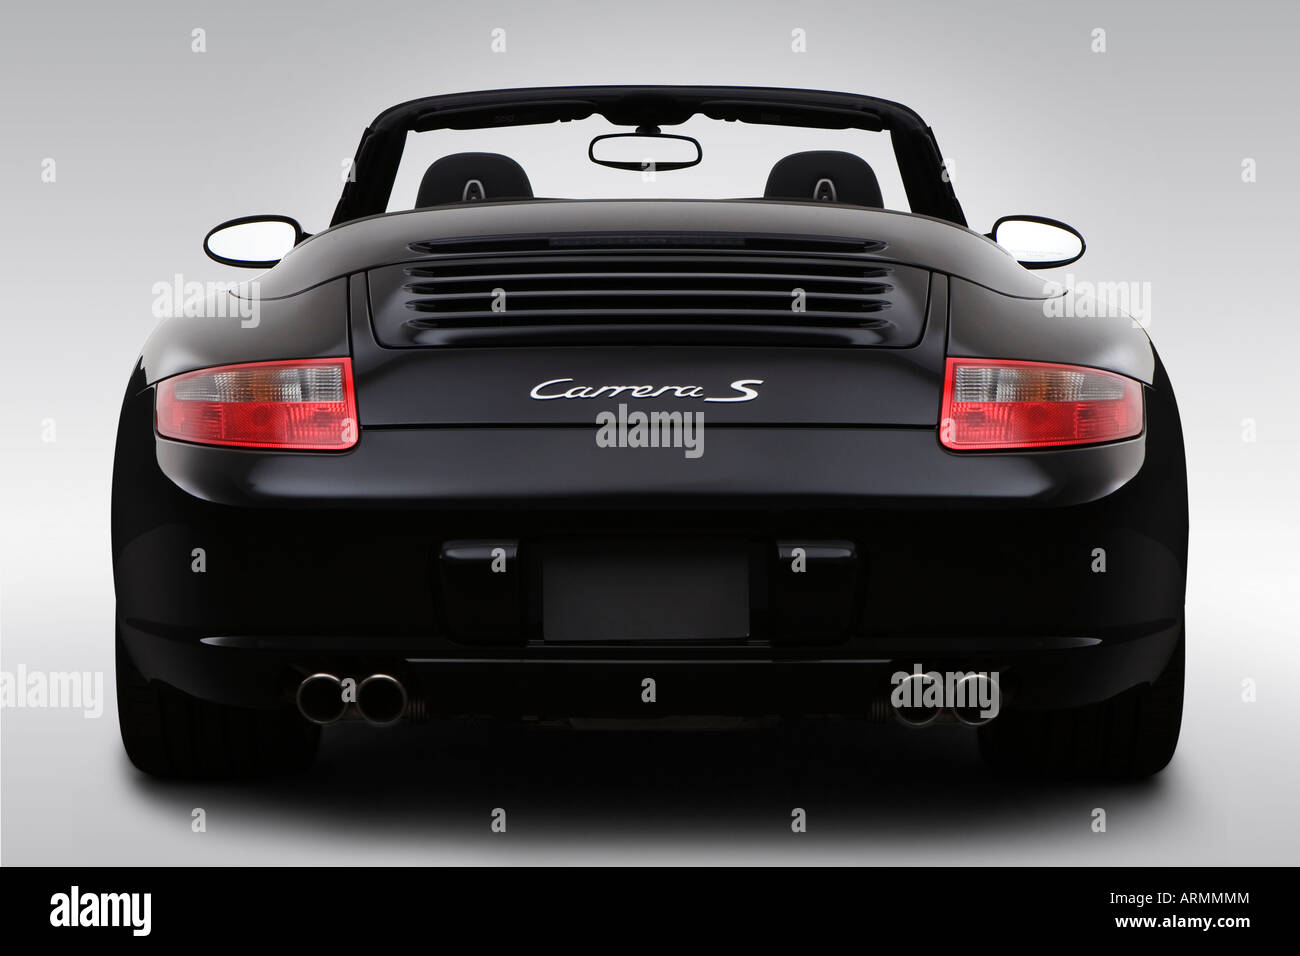 2008 Porsche 911 Carrera S in Black - Low/Wide Rear Stock Photo - Alamy